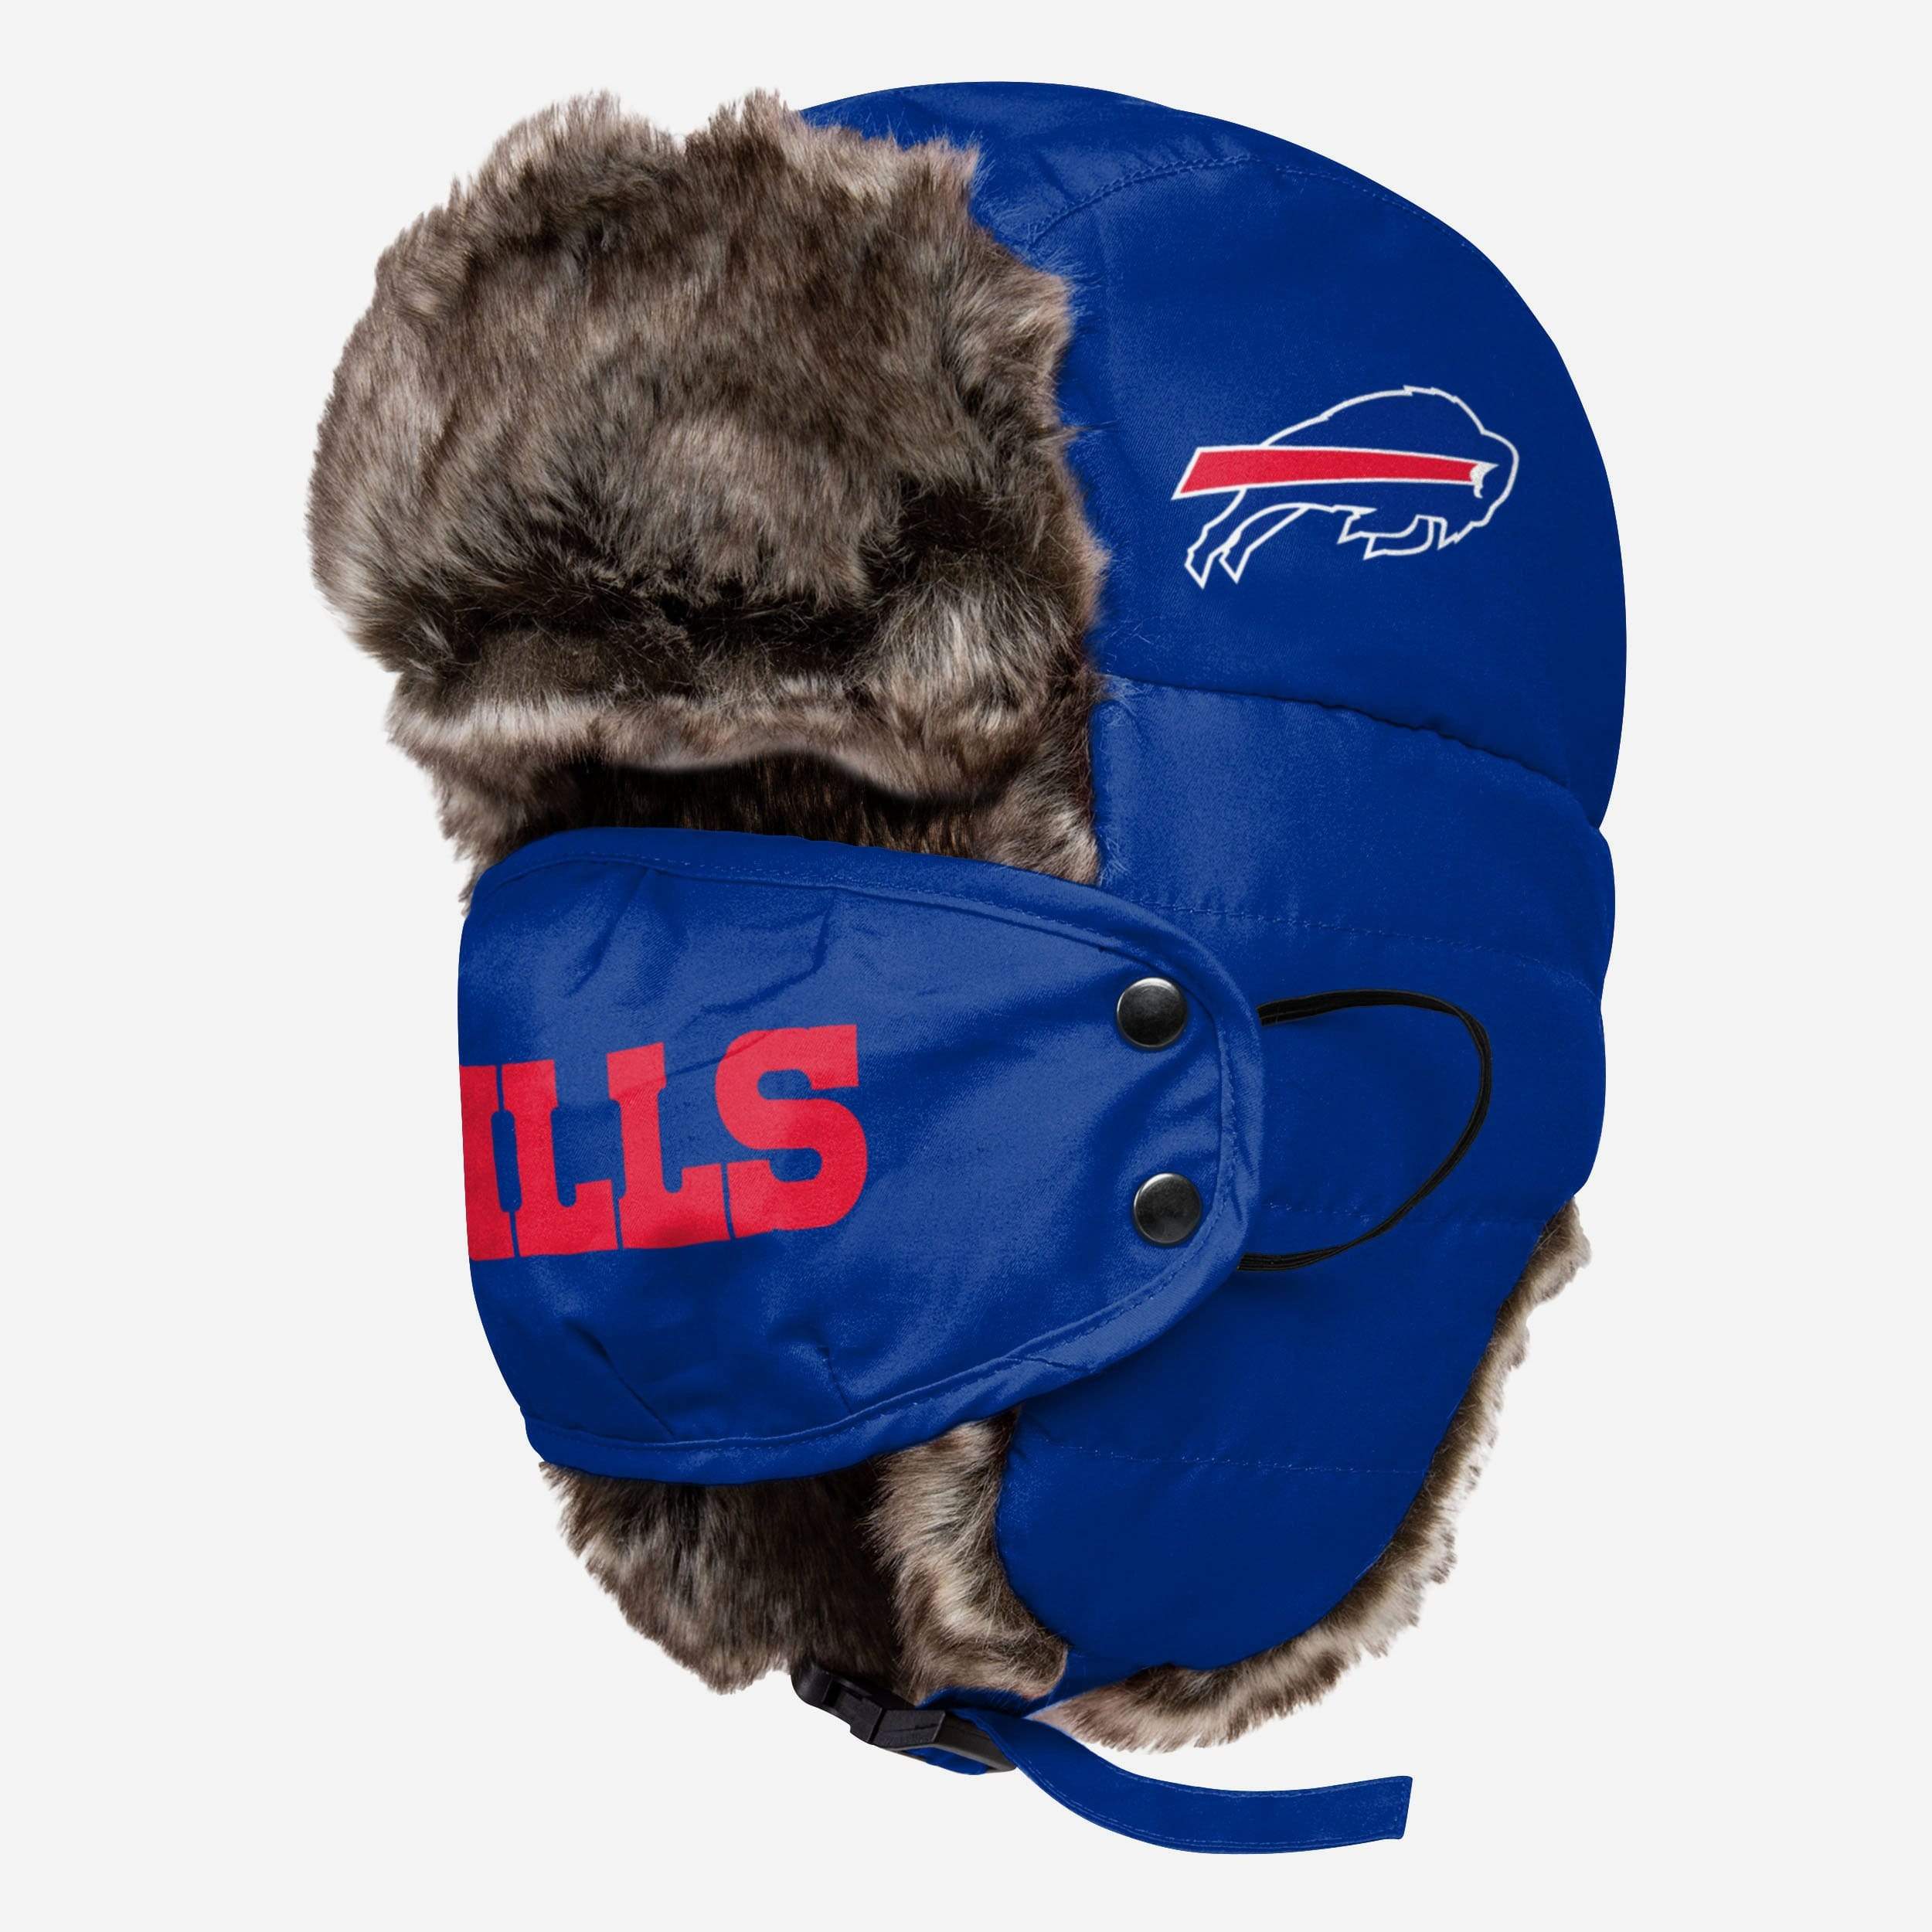 buffalo bills fuzzy hat